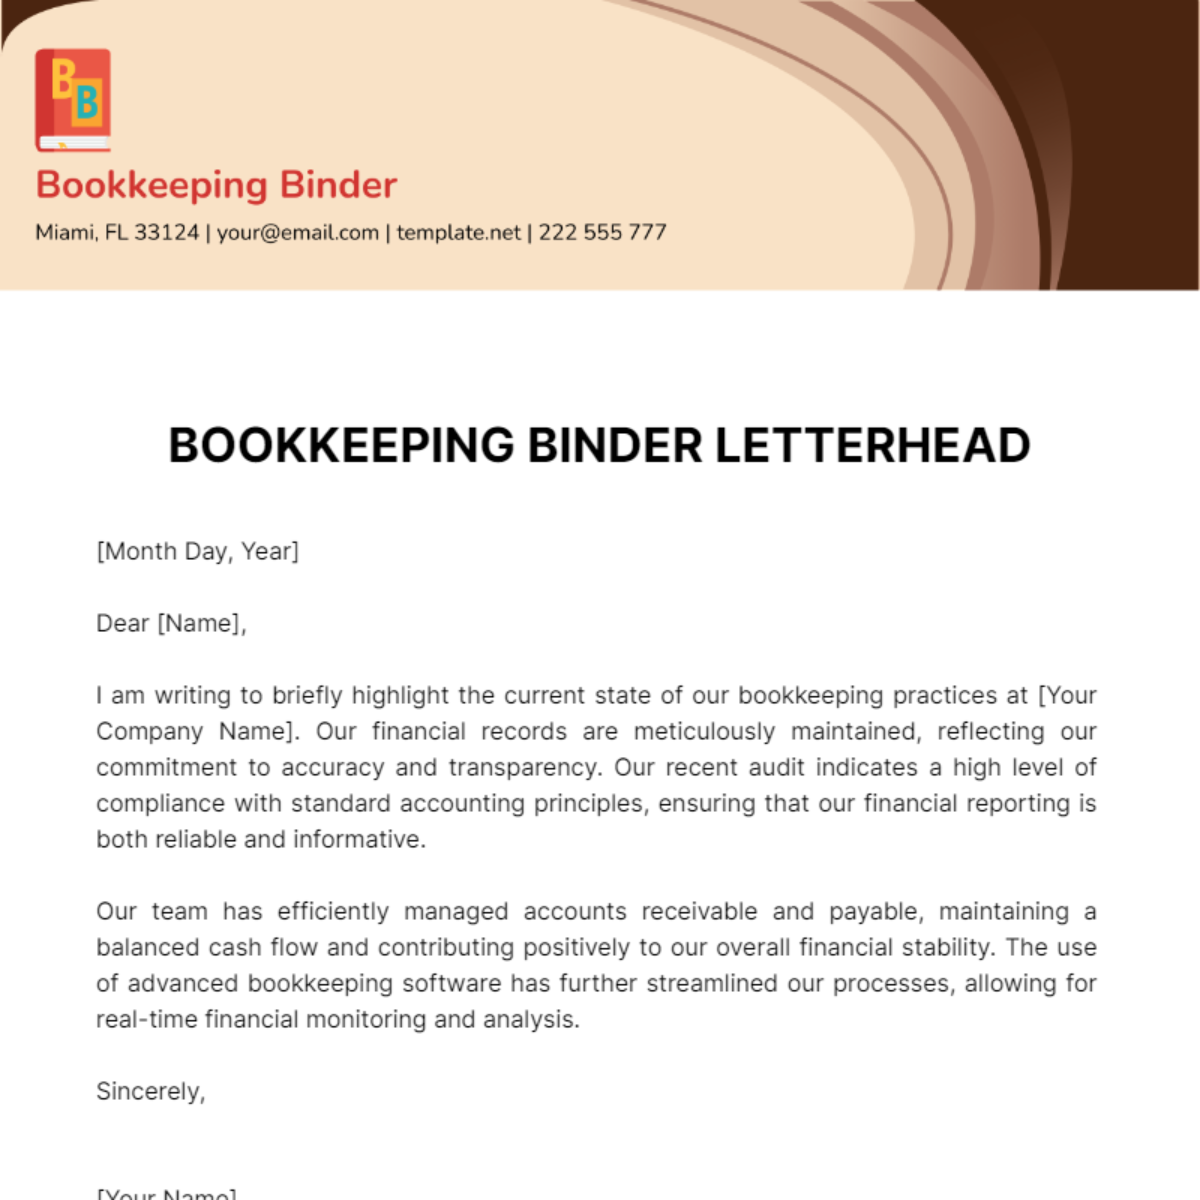 Bookkeeping Binder Letterhead Template